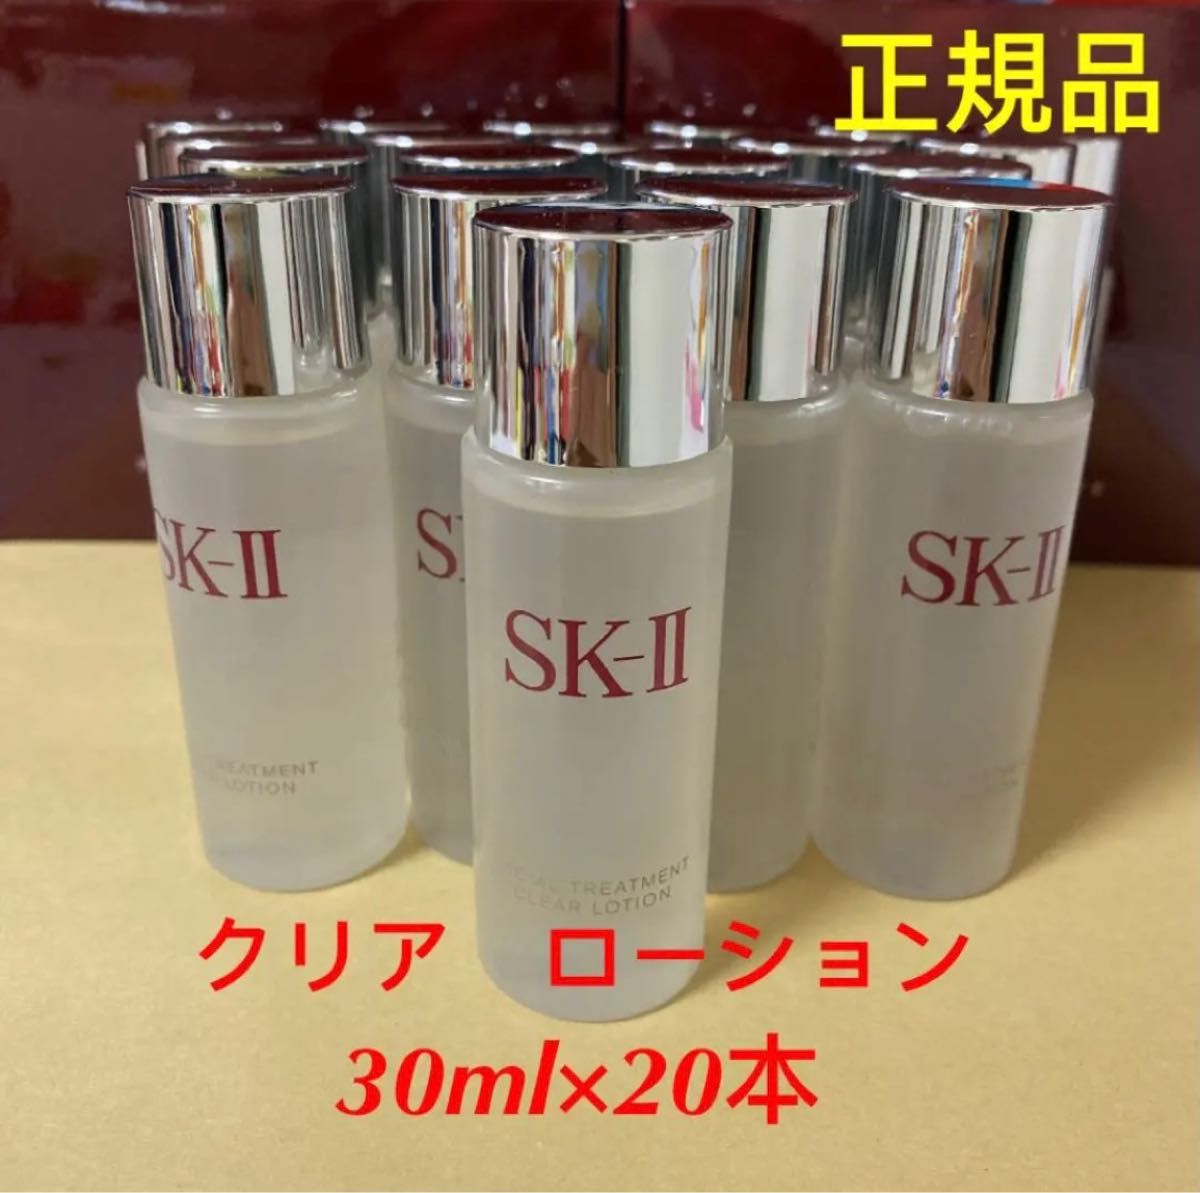 SK-II フェイシャルトリートメント クリアローション(ふきとり用化粧水